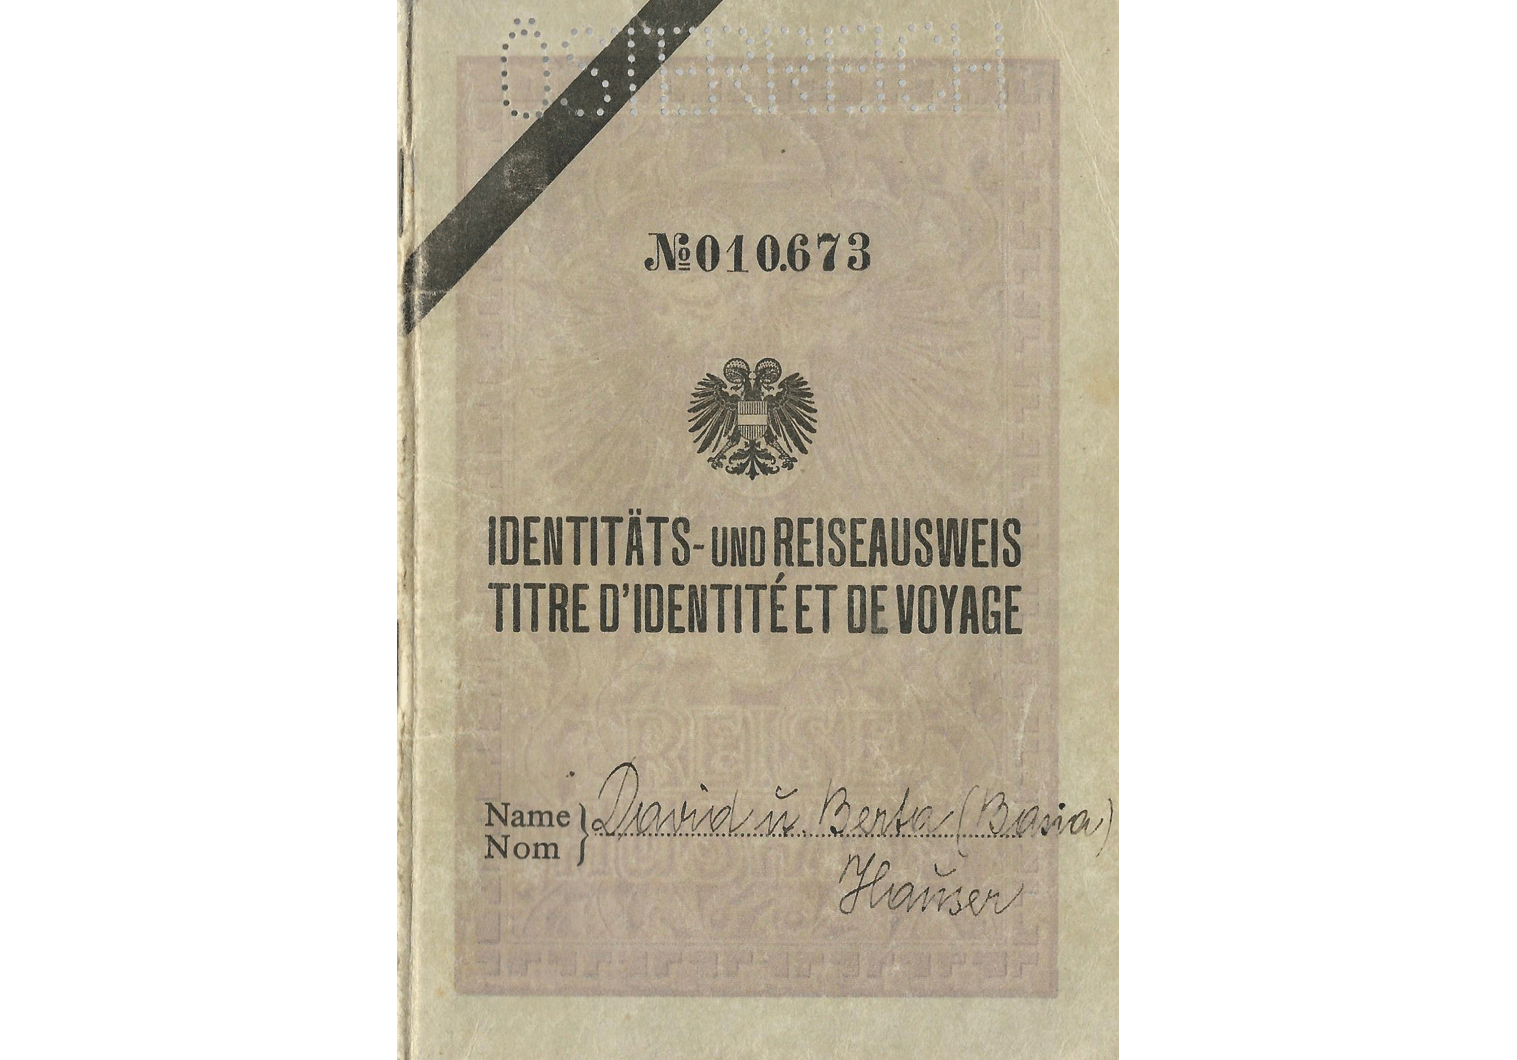 Rare pre-Anschluss stateless passport